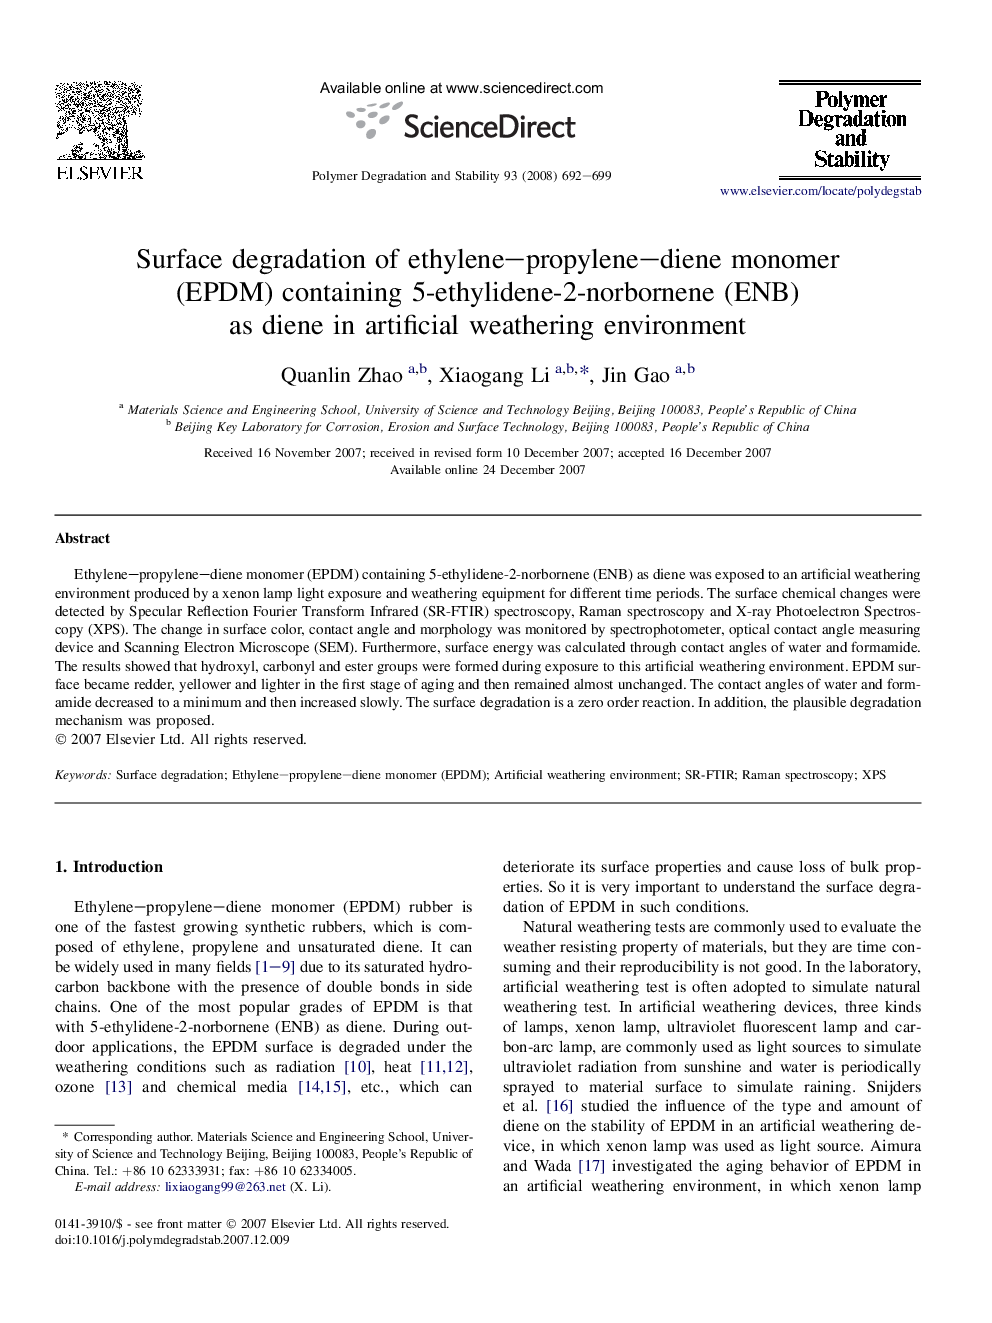 Surface degradation of ethylene-propylene-diene monomer (EPDM) containing 5-ethylidene-2-norbornene (ENB) as diene in artificial weathering environment